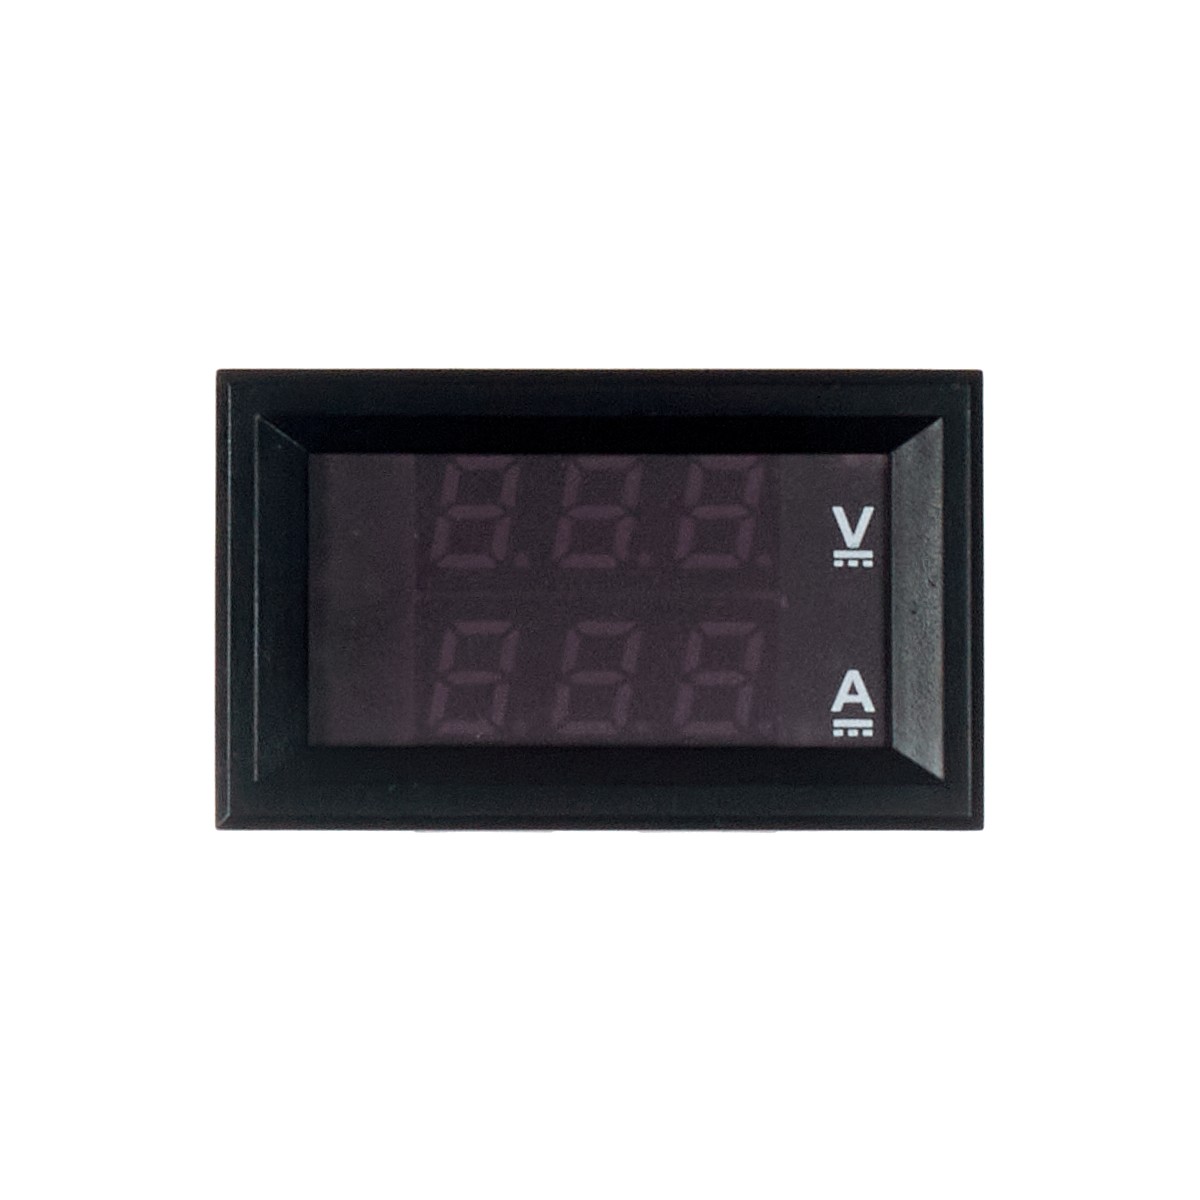 Mini Voltimetro Amperimetro Digital Dc 0-100v 10a 0.56